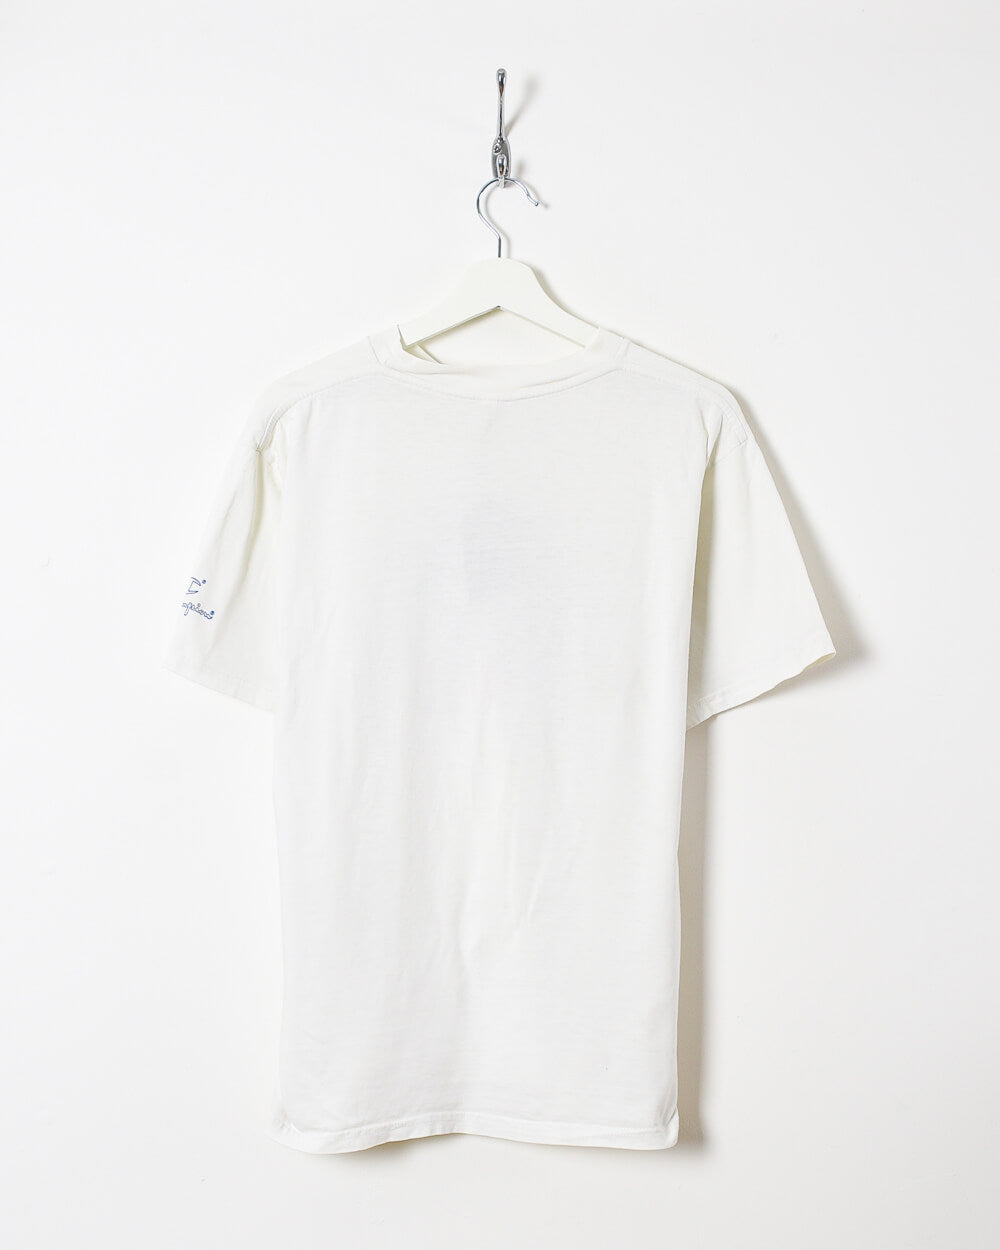 White Champion Authentic Athletic Apparel T-Shirt - Medium